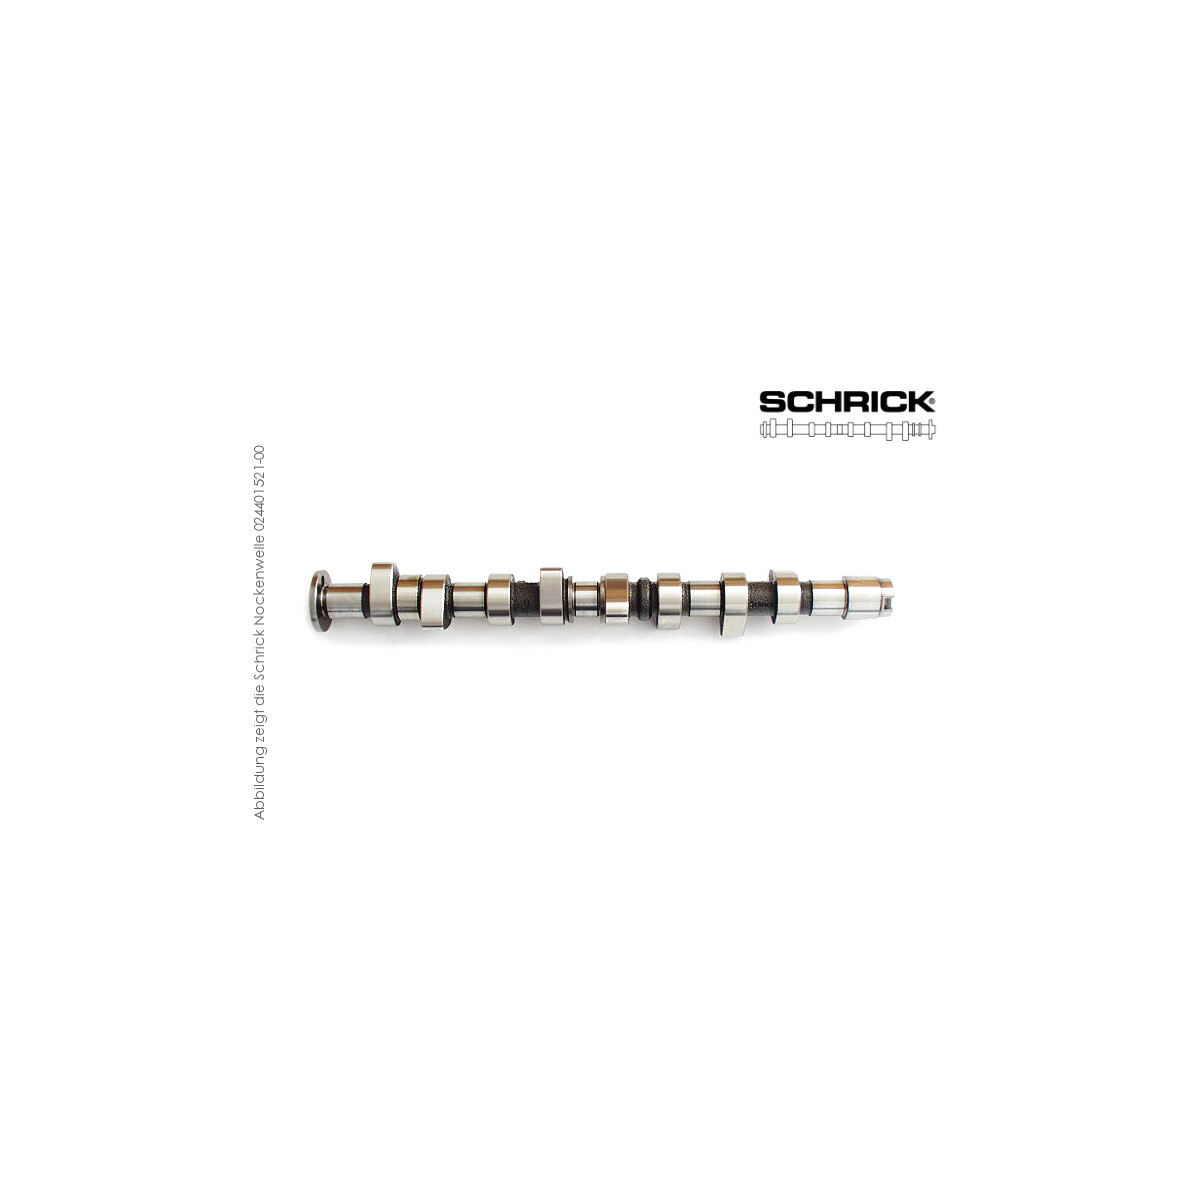 Schrick Nockenwelle für Seat Toledo, Cordoba, Ibiza | 1,5-2,0L 8V 4-Zyl. 827  | 304° Synchron (Schrick 001401040-06)